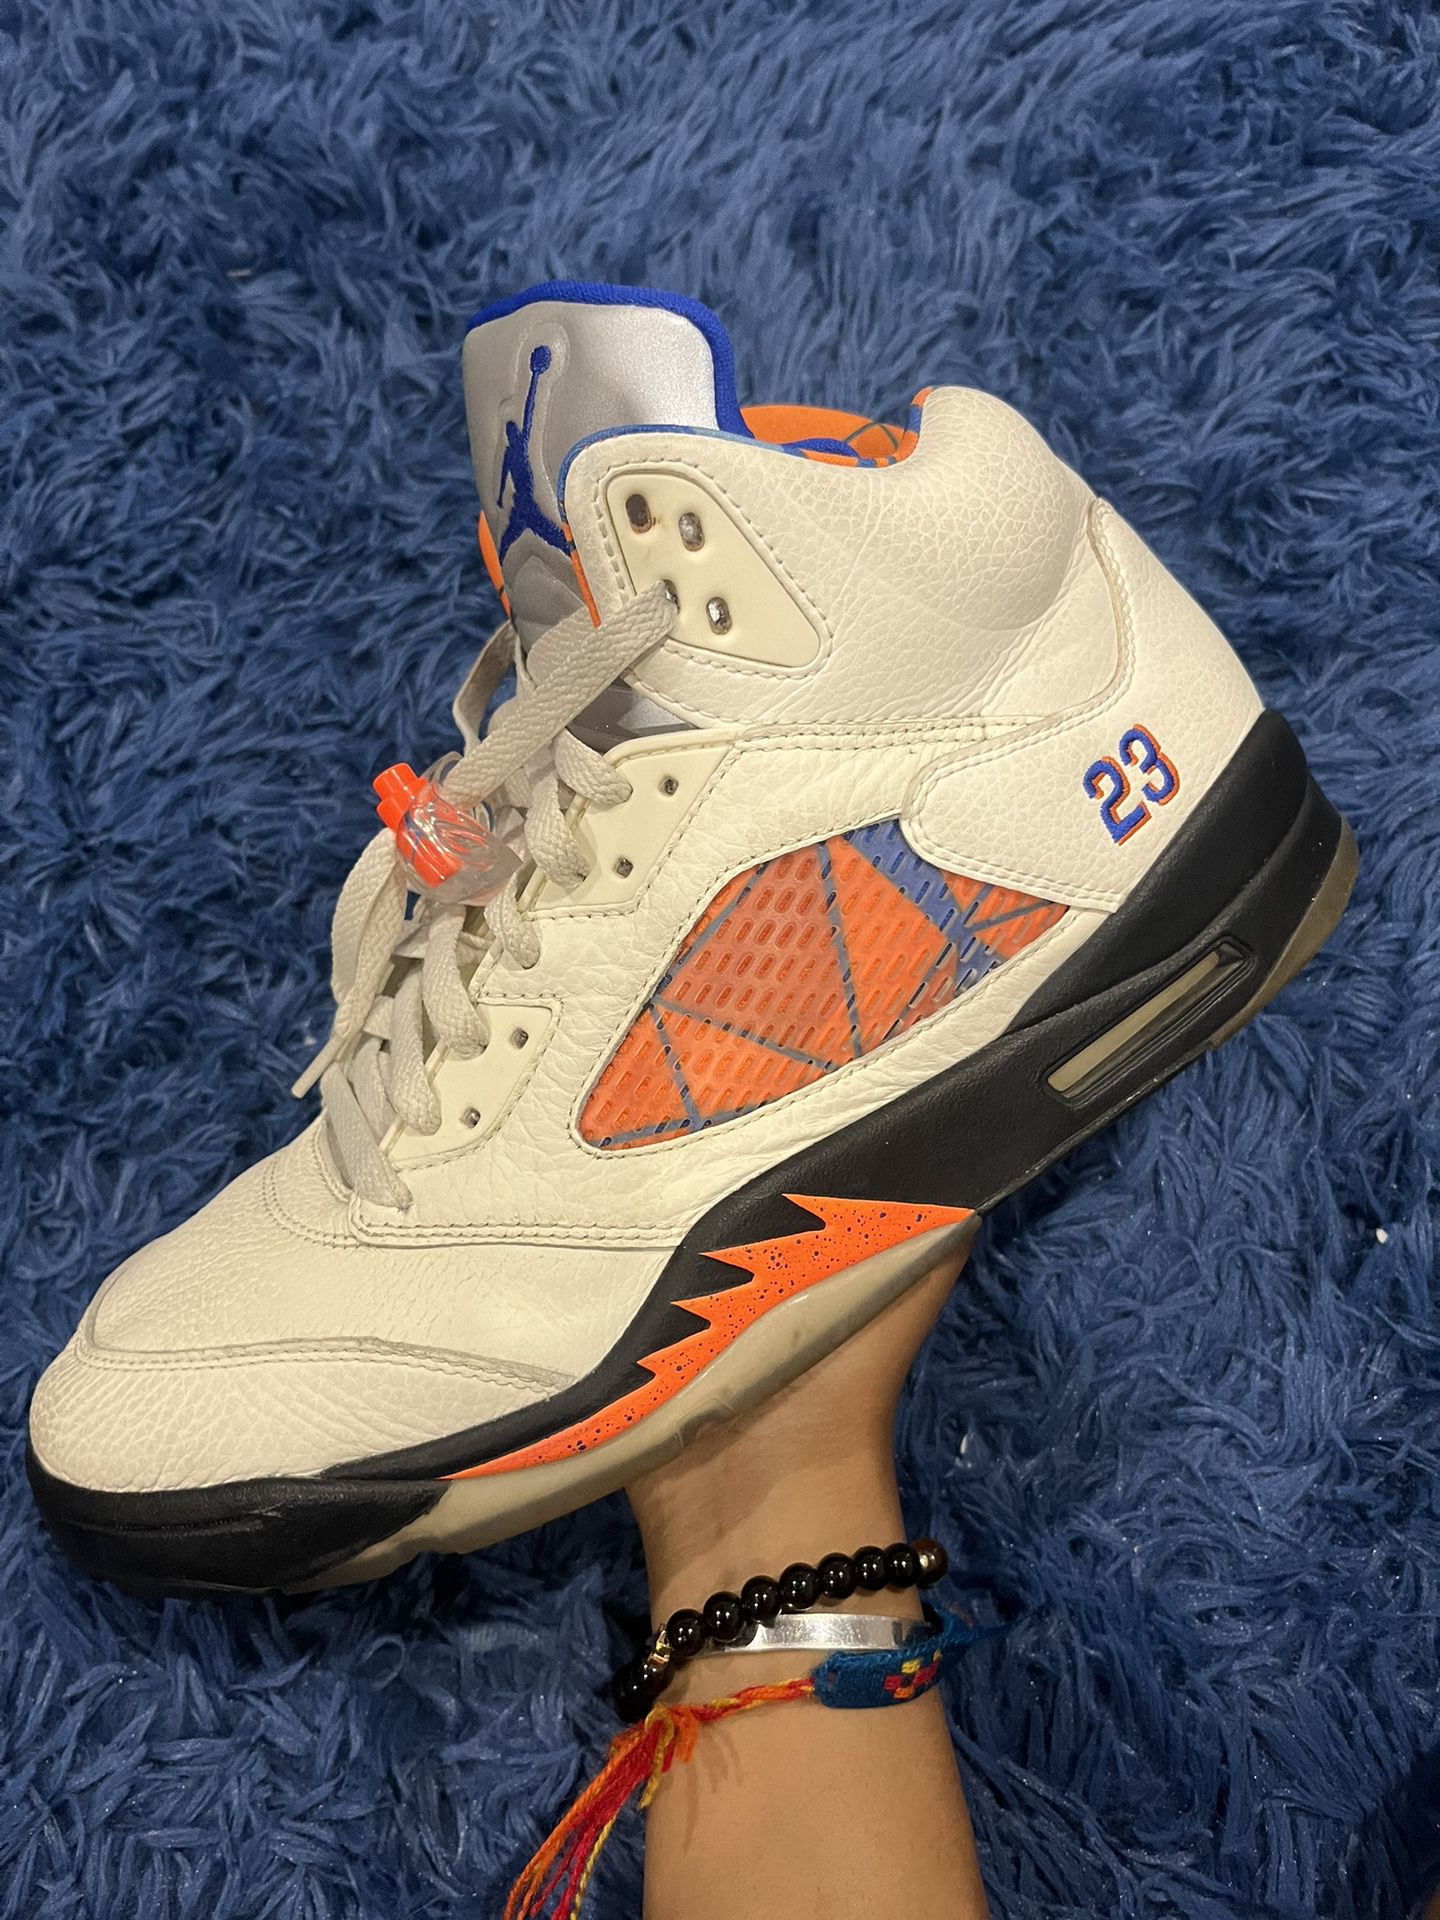 Jordan 5 Knicks Size 12